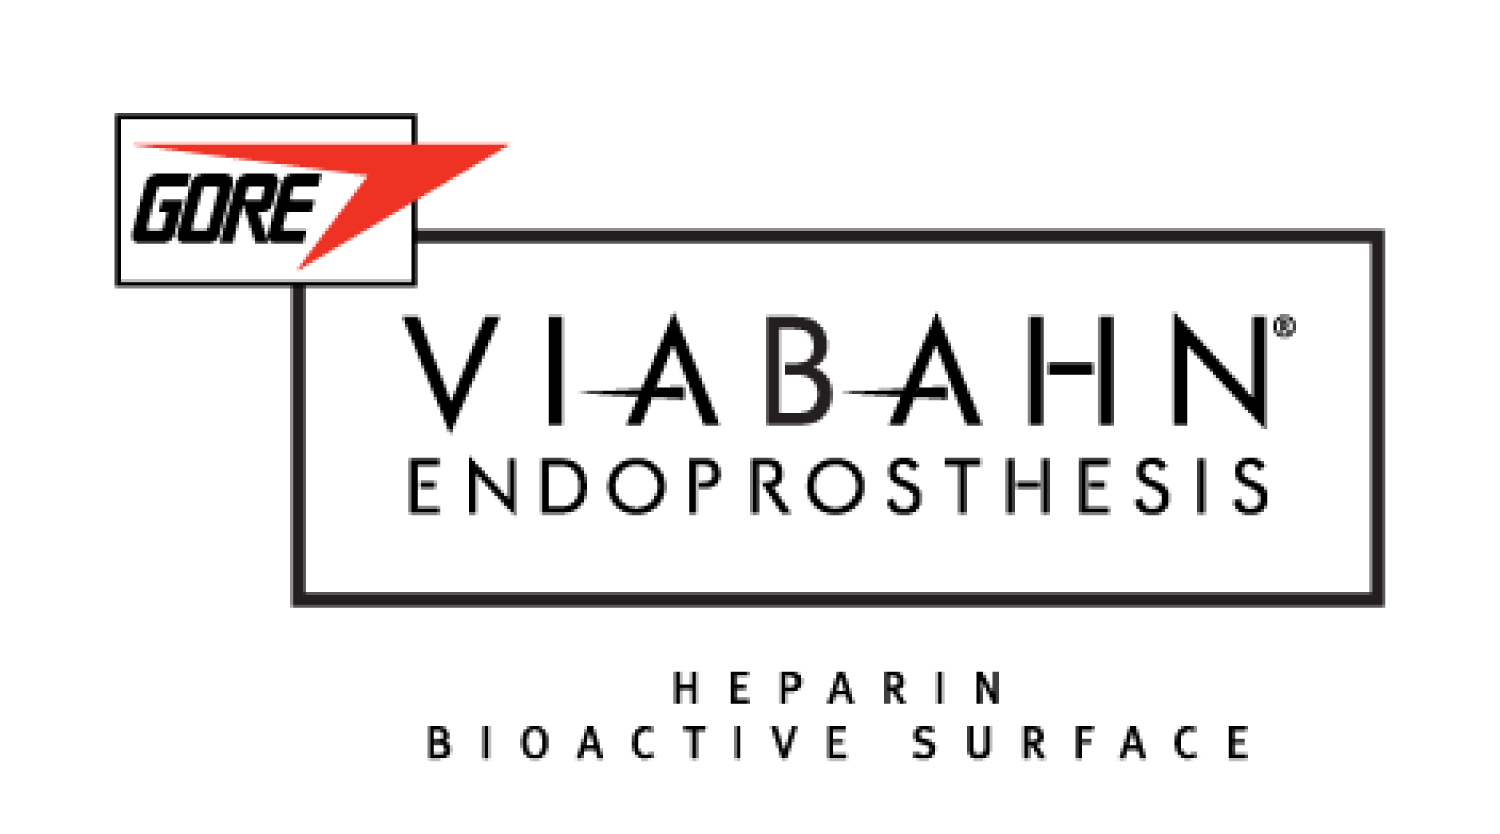 VIABAHN ENDOPROSTHESIS - HEPARİN BIOACTIVE SURFACE